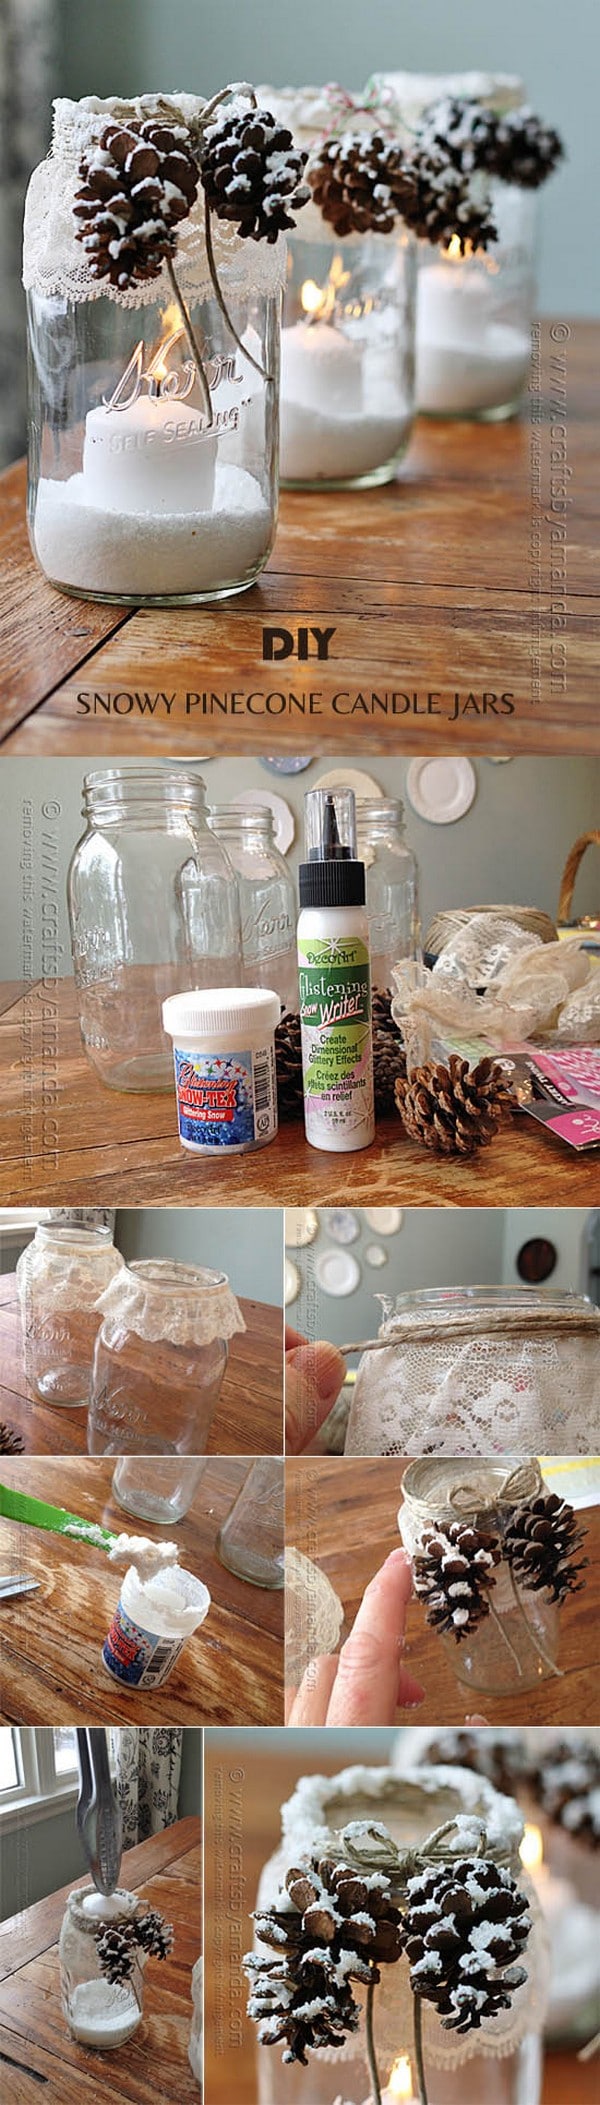 creative DIY snowy pinecone candle jars for winter weddings